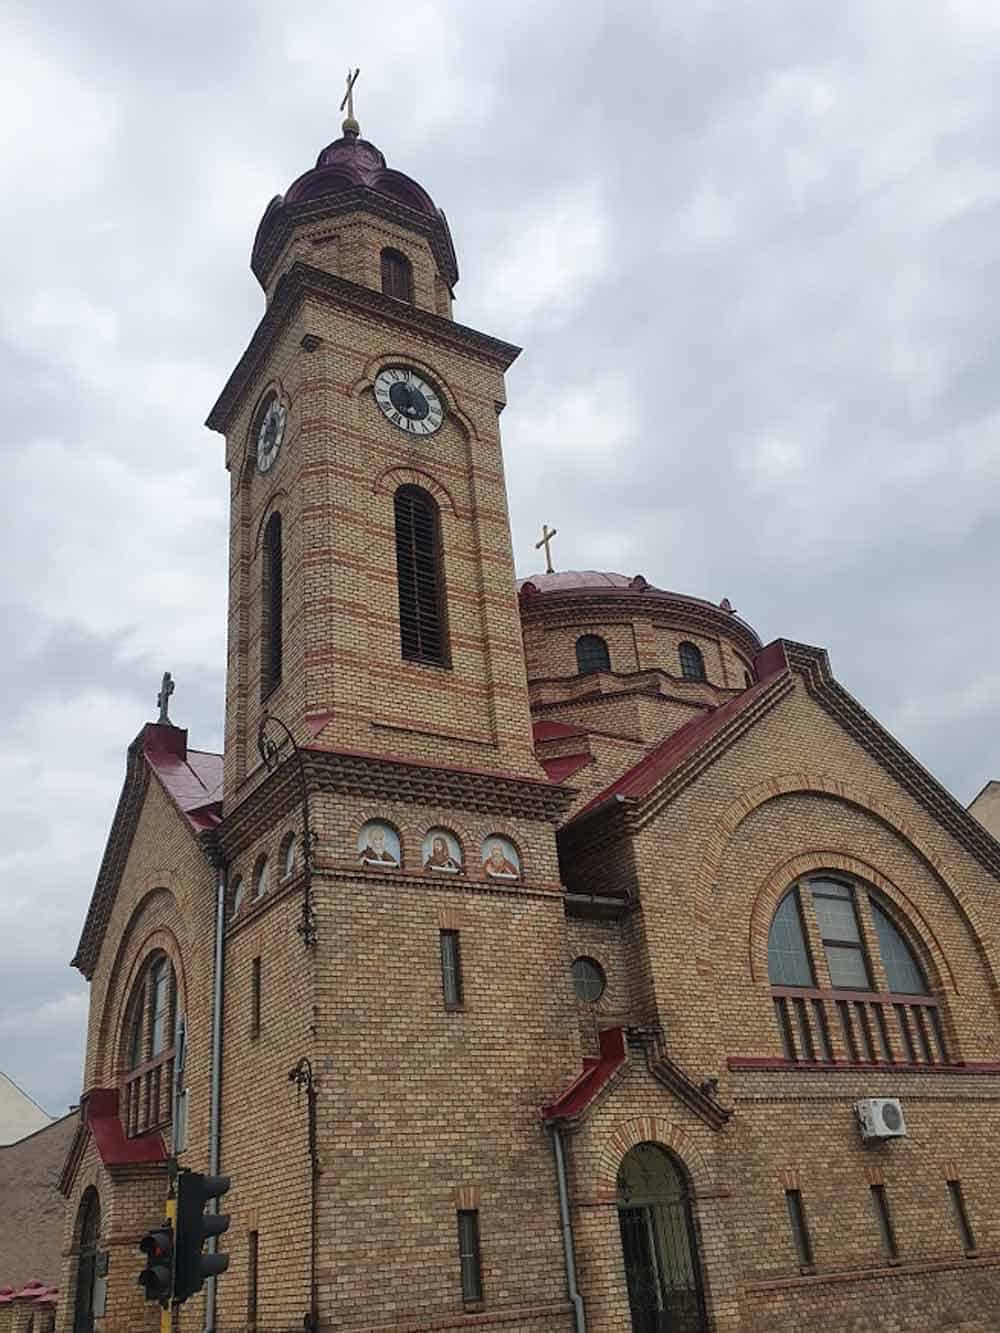 Rumunska pravoslavna crkva u centru Vršca